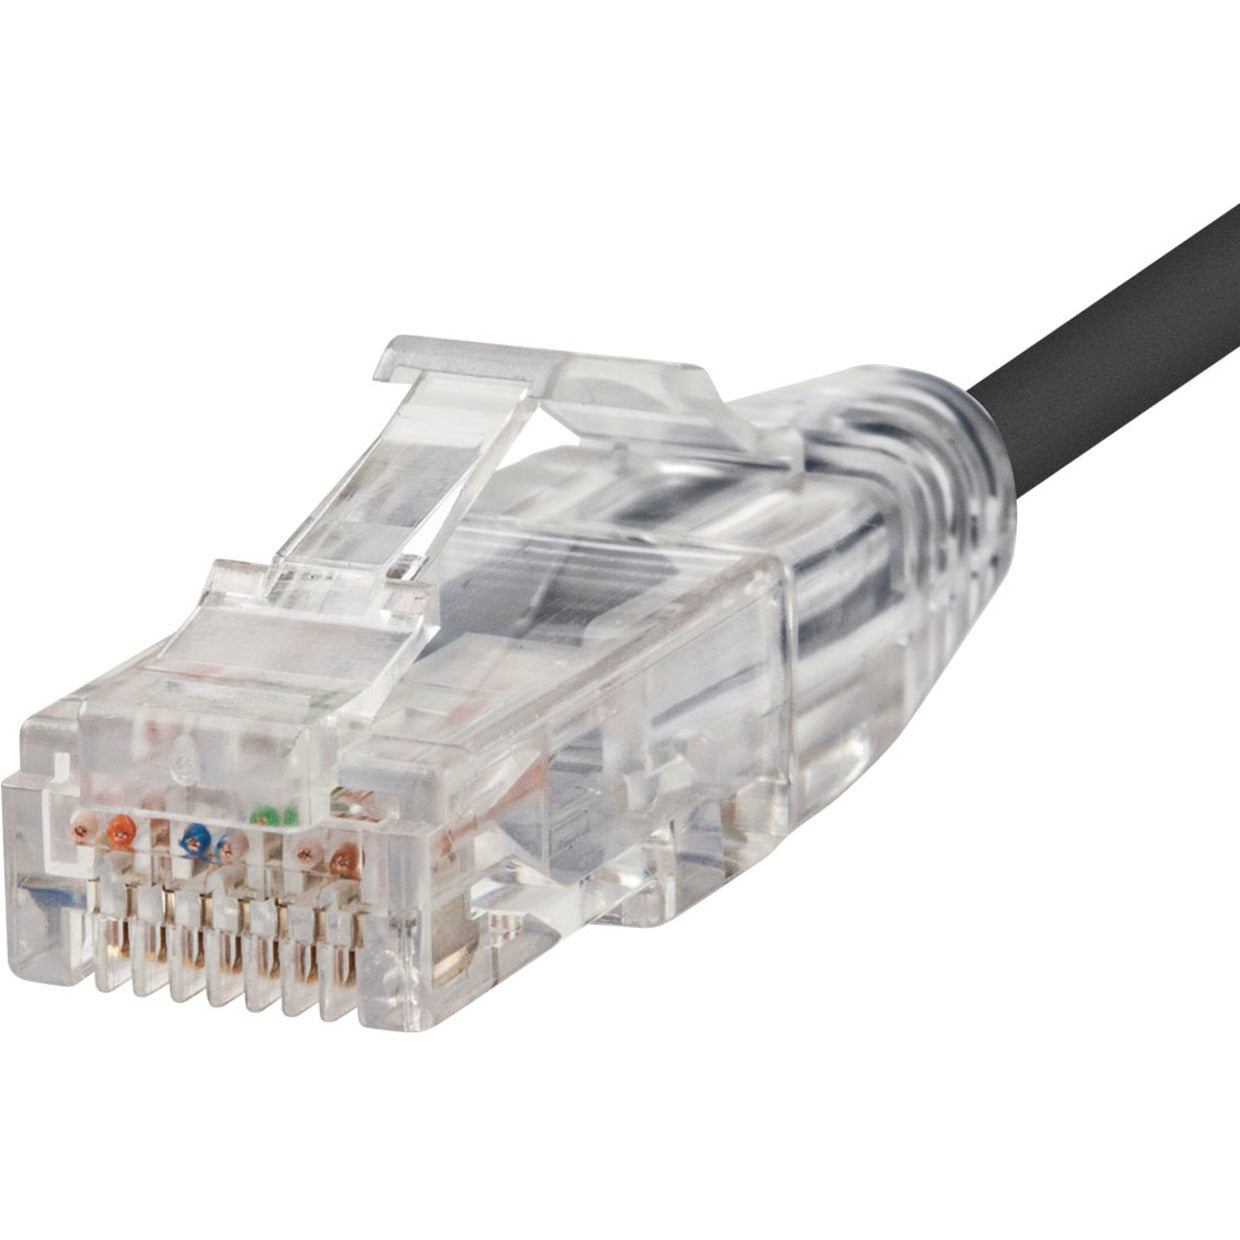 Monoprice 13537 SlimRun Cat6 28AWG UTP Ethernet Network Cable, 7ft Black, Flexible, Snagless